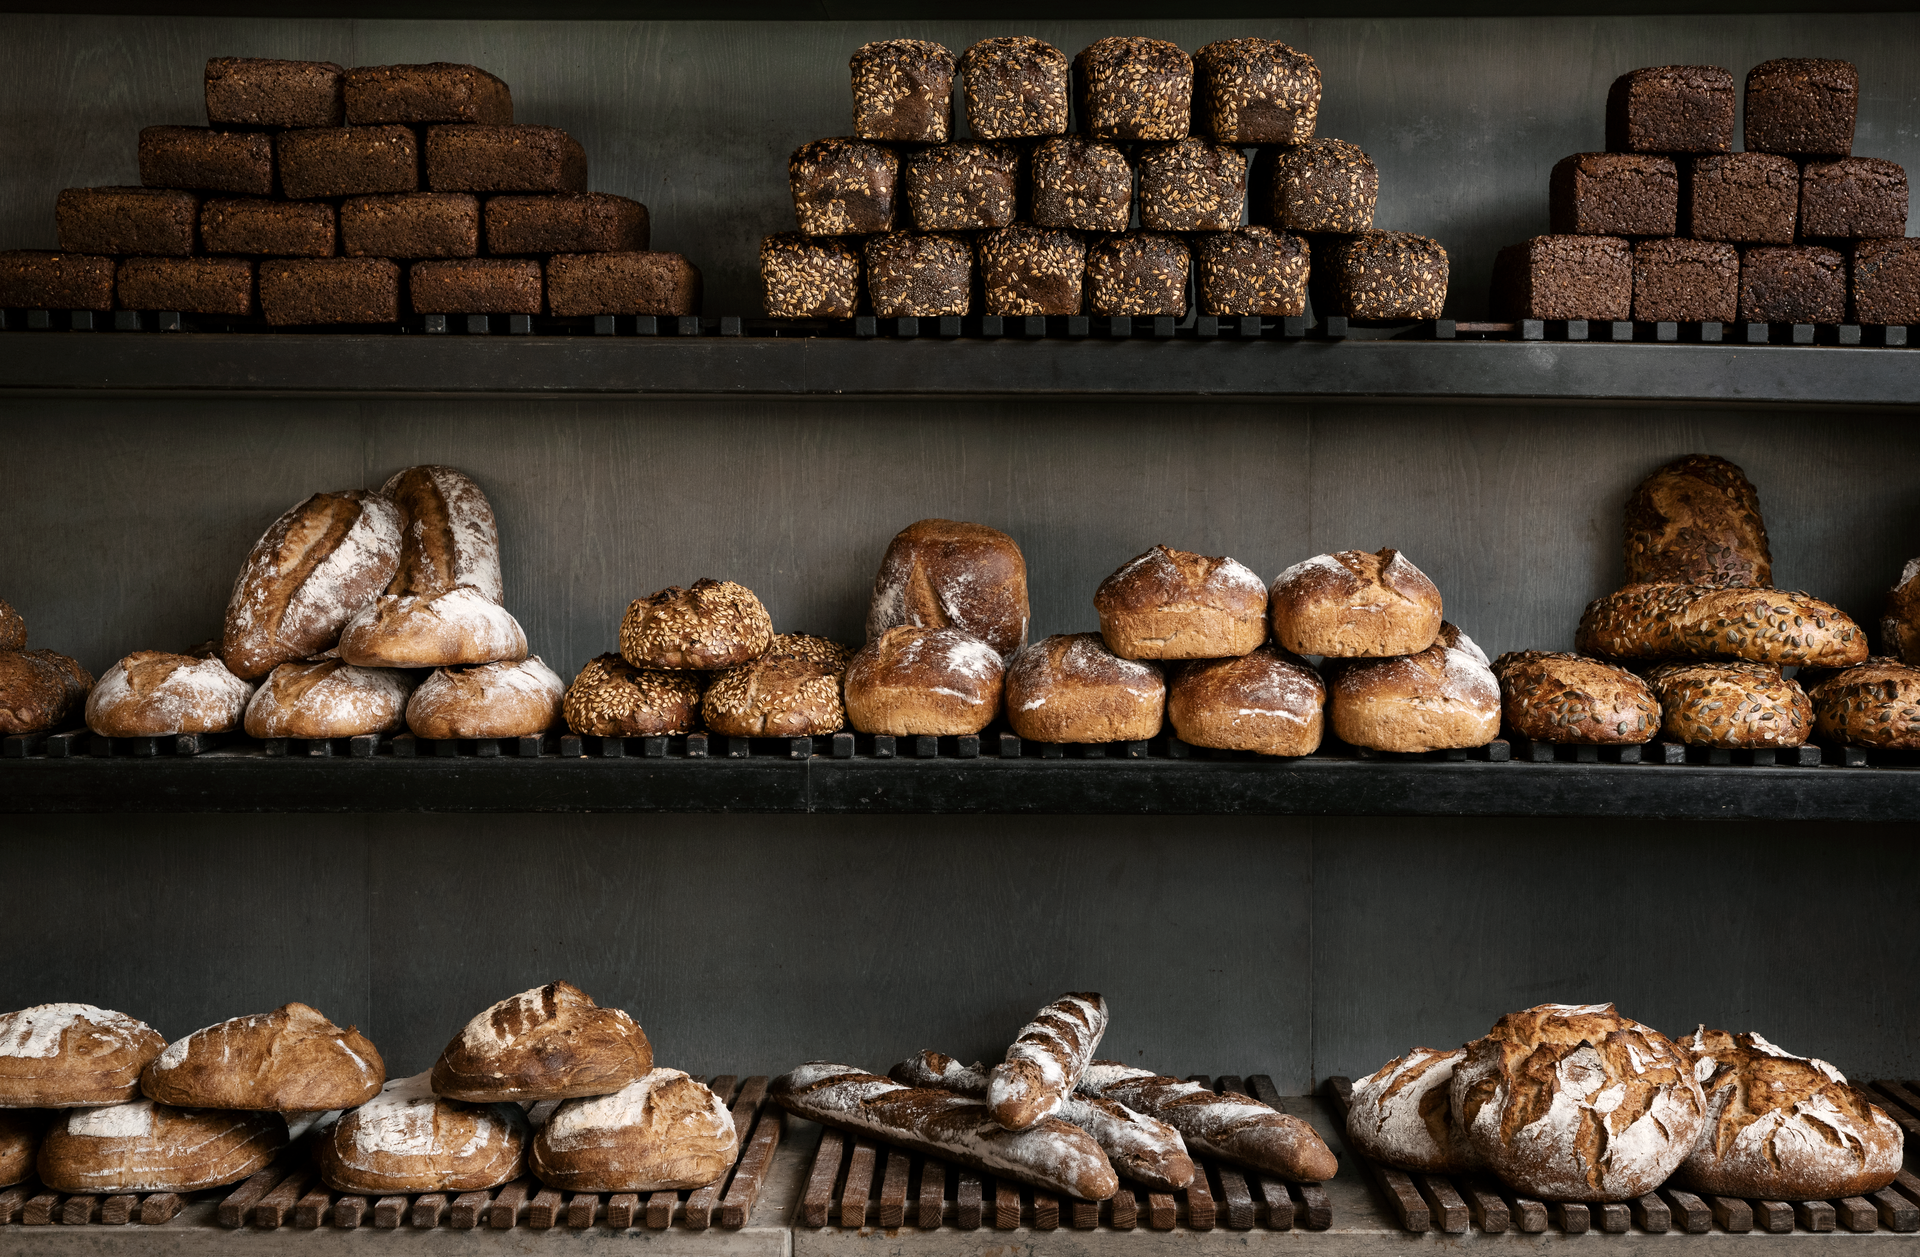 A breadshelf inside our bakery